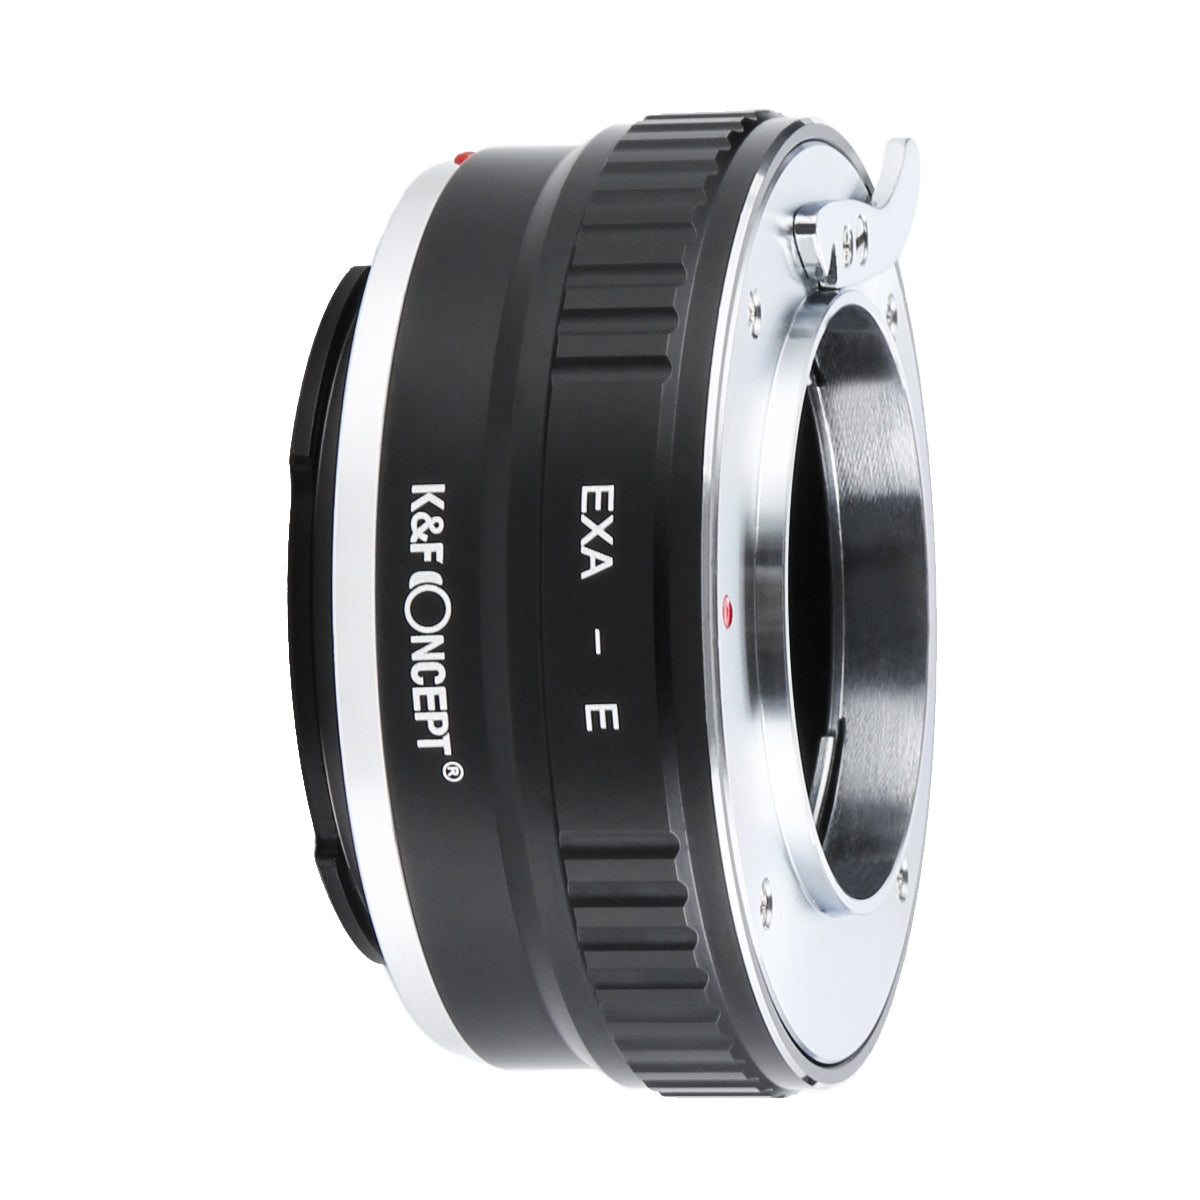 K&F CONCEPT Exakta EXA-NEX Sony E/FE Lens mount adapter